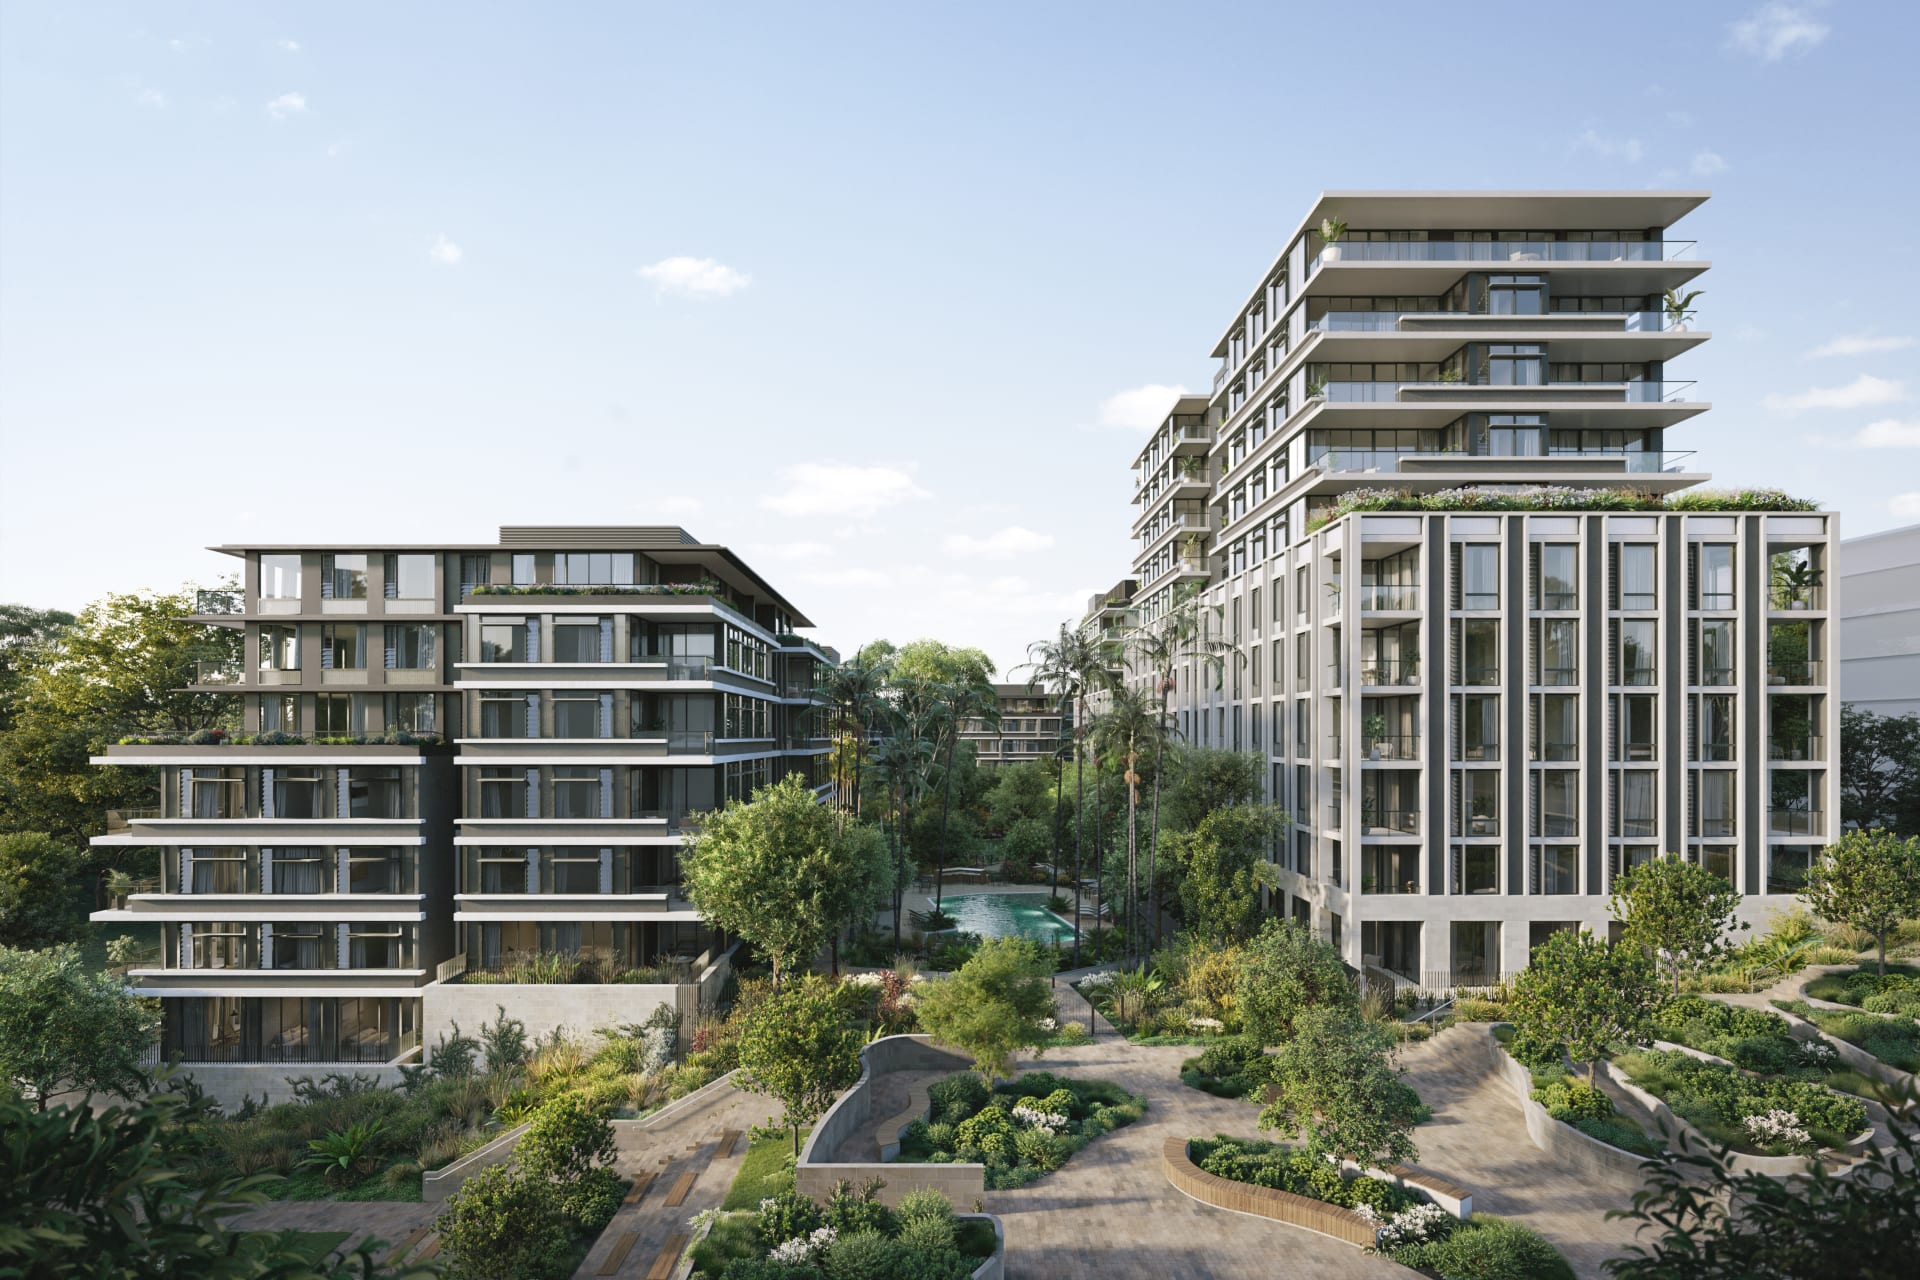 Top Spring Australia launch parkside St Leonards apartment development, The Newlands